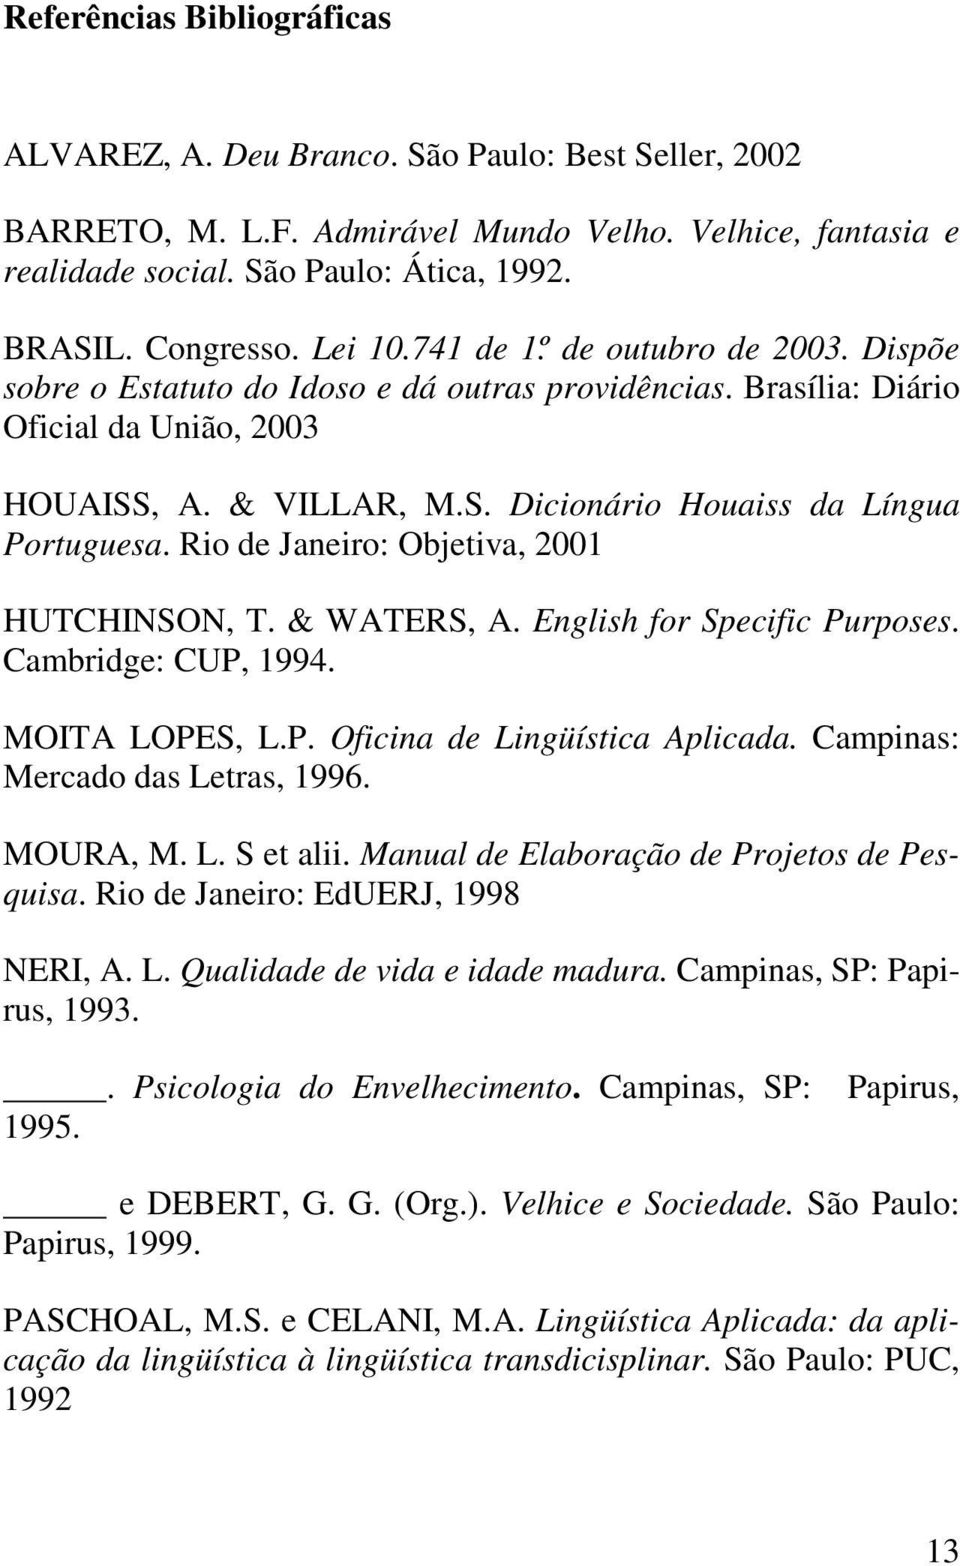 Rio de Janeiro: Objetiva, 2001 HUTCHINSON, T. & WATERS, A. English for Specific Purposes. Cambridge: CUP, 1994. MOITA LOPES, L.P. Oficina de Lingüística Aplicada. Campinas: Mercado das Letras, 1996.